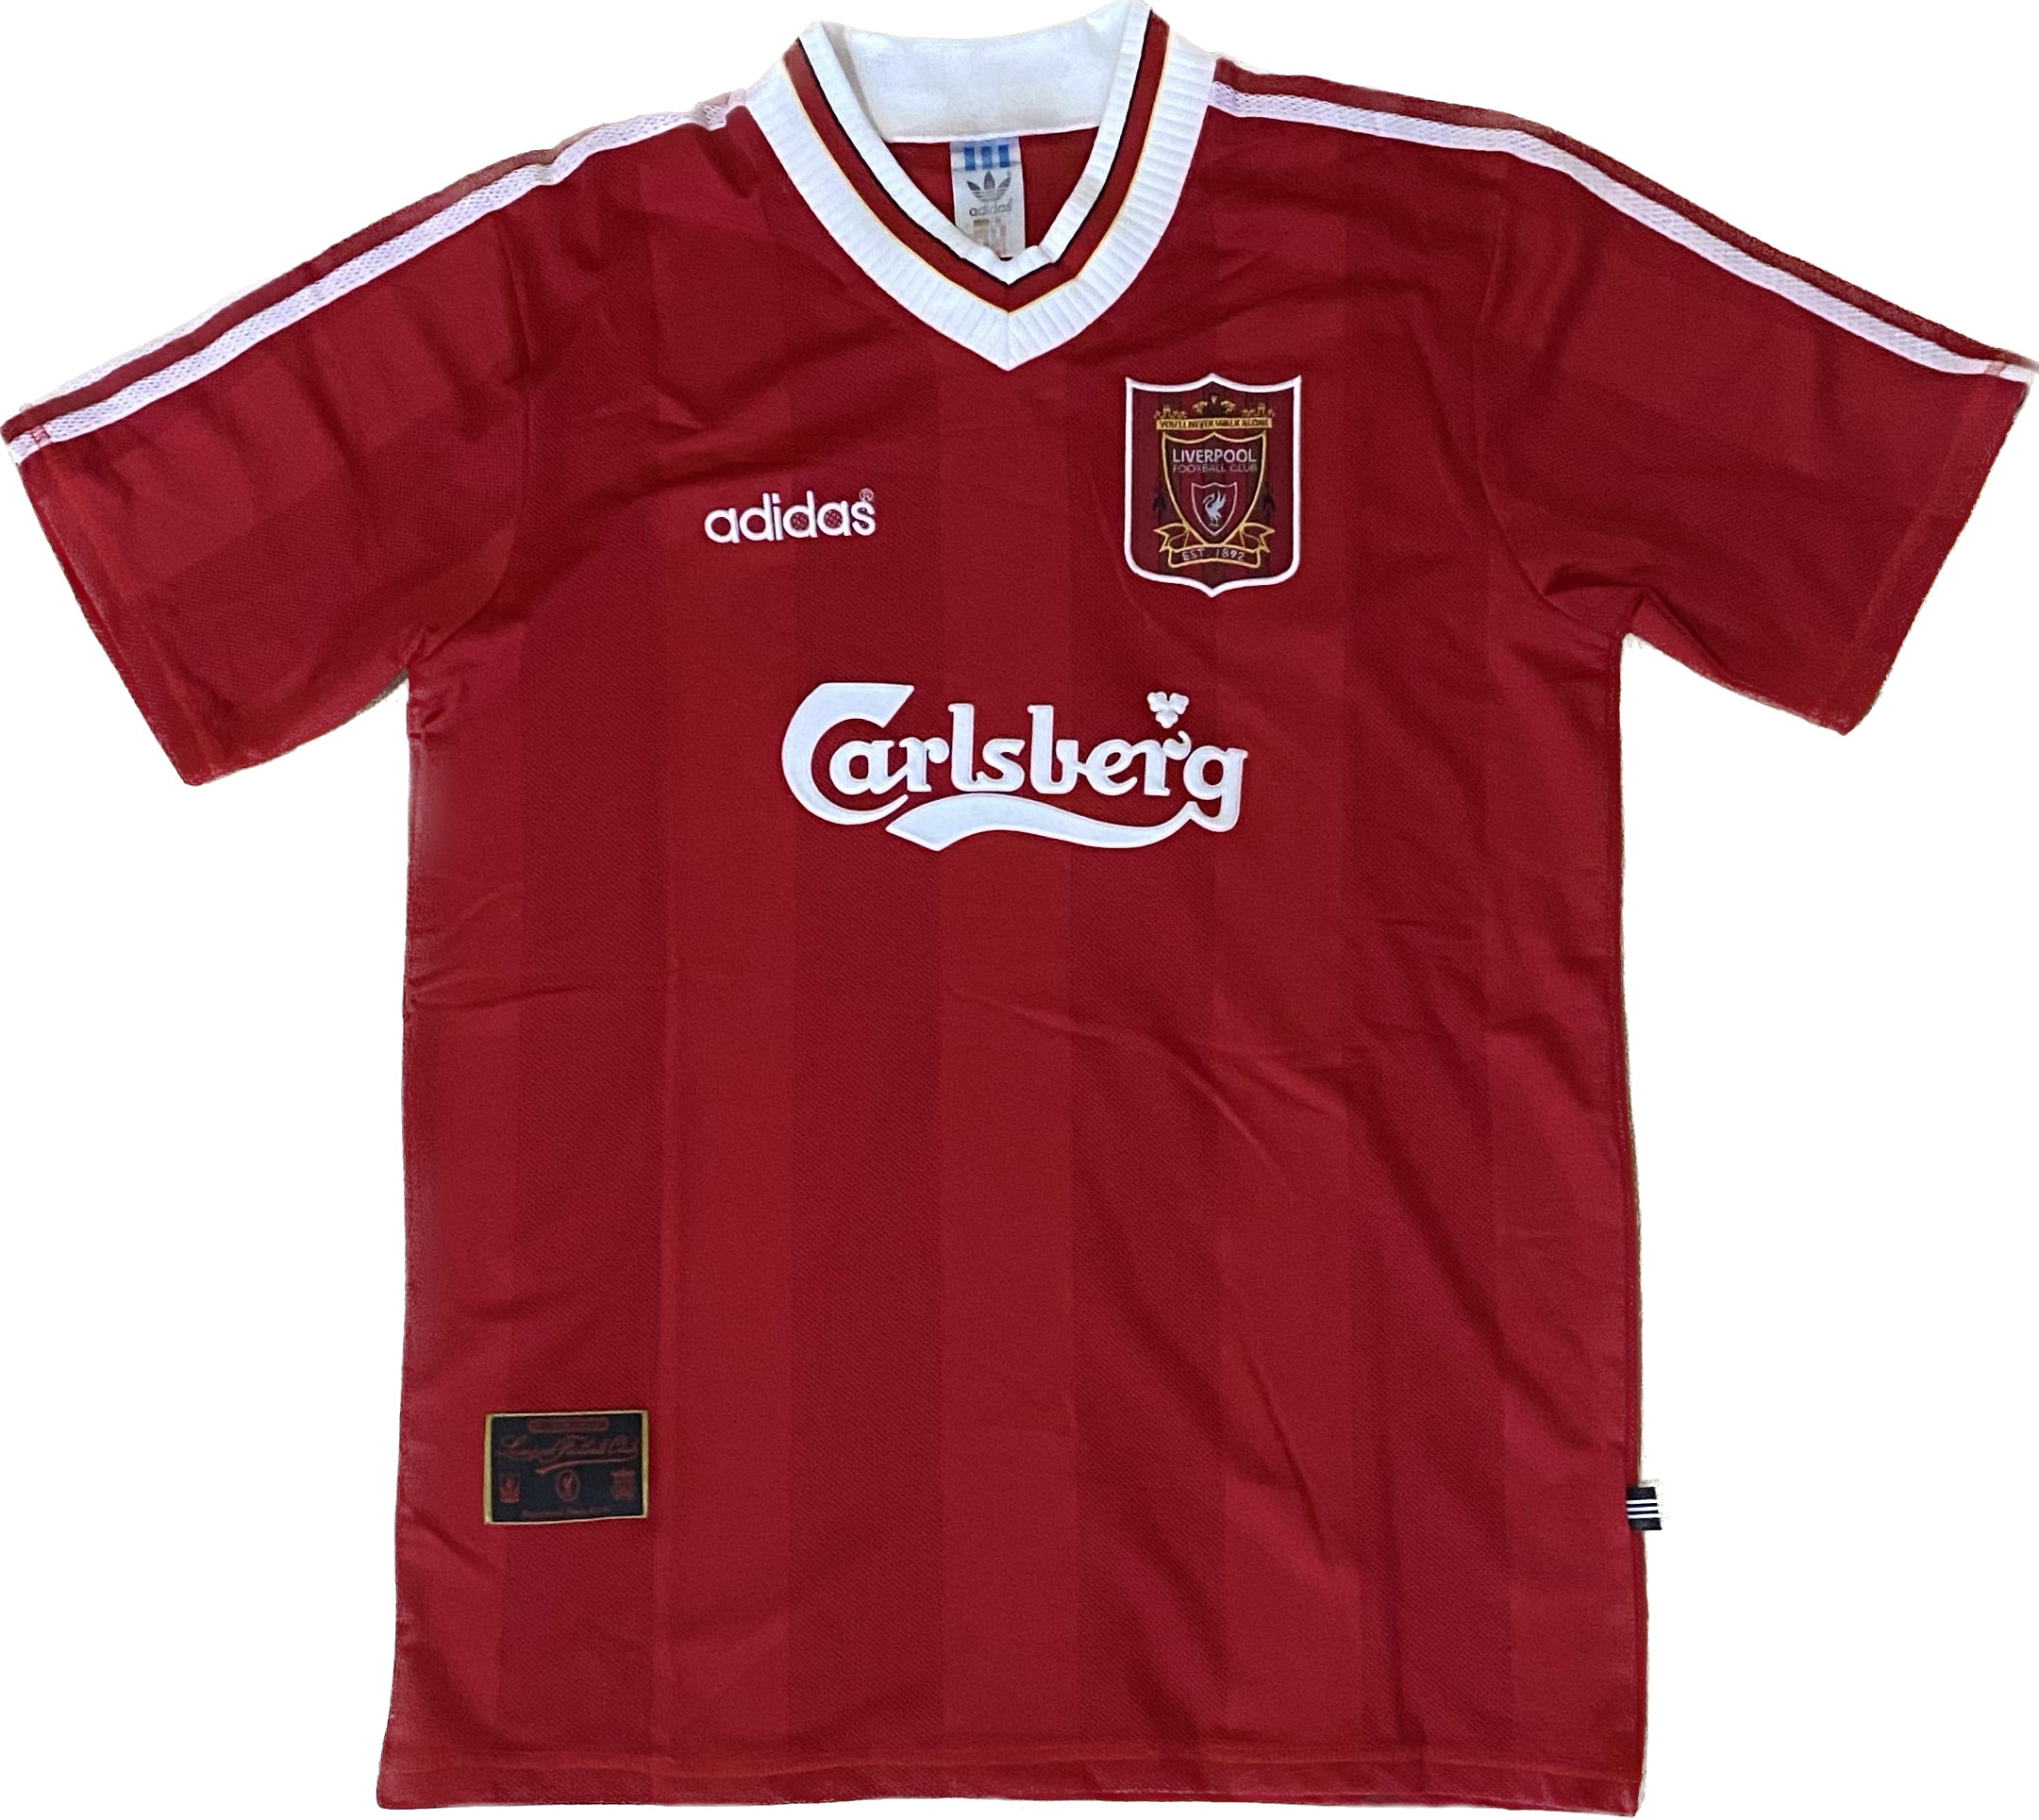 Liverpool FC 1995-96 Home Kit